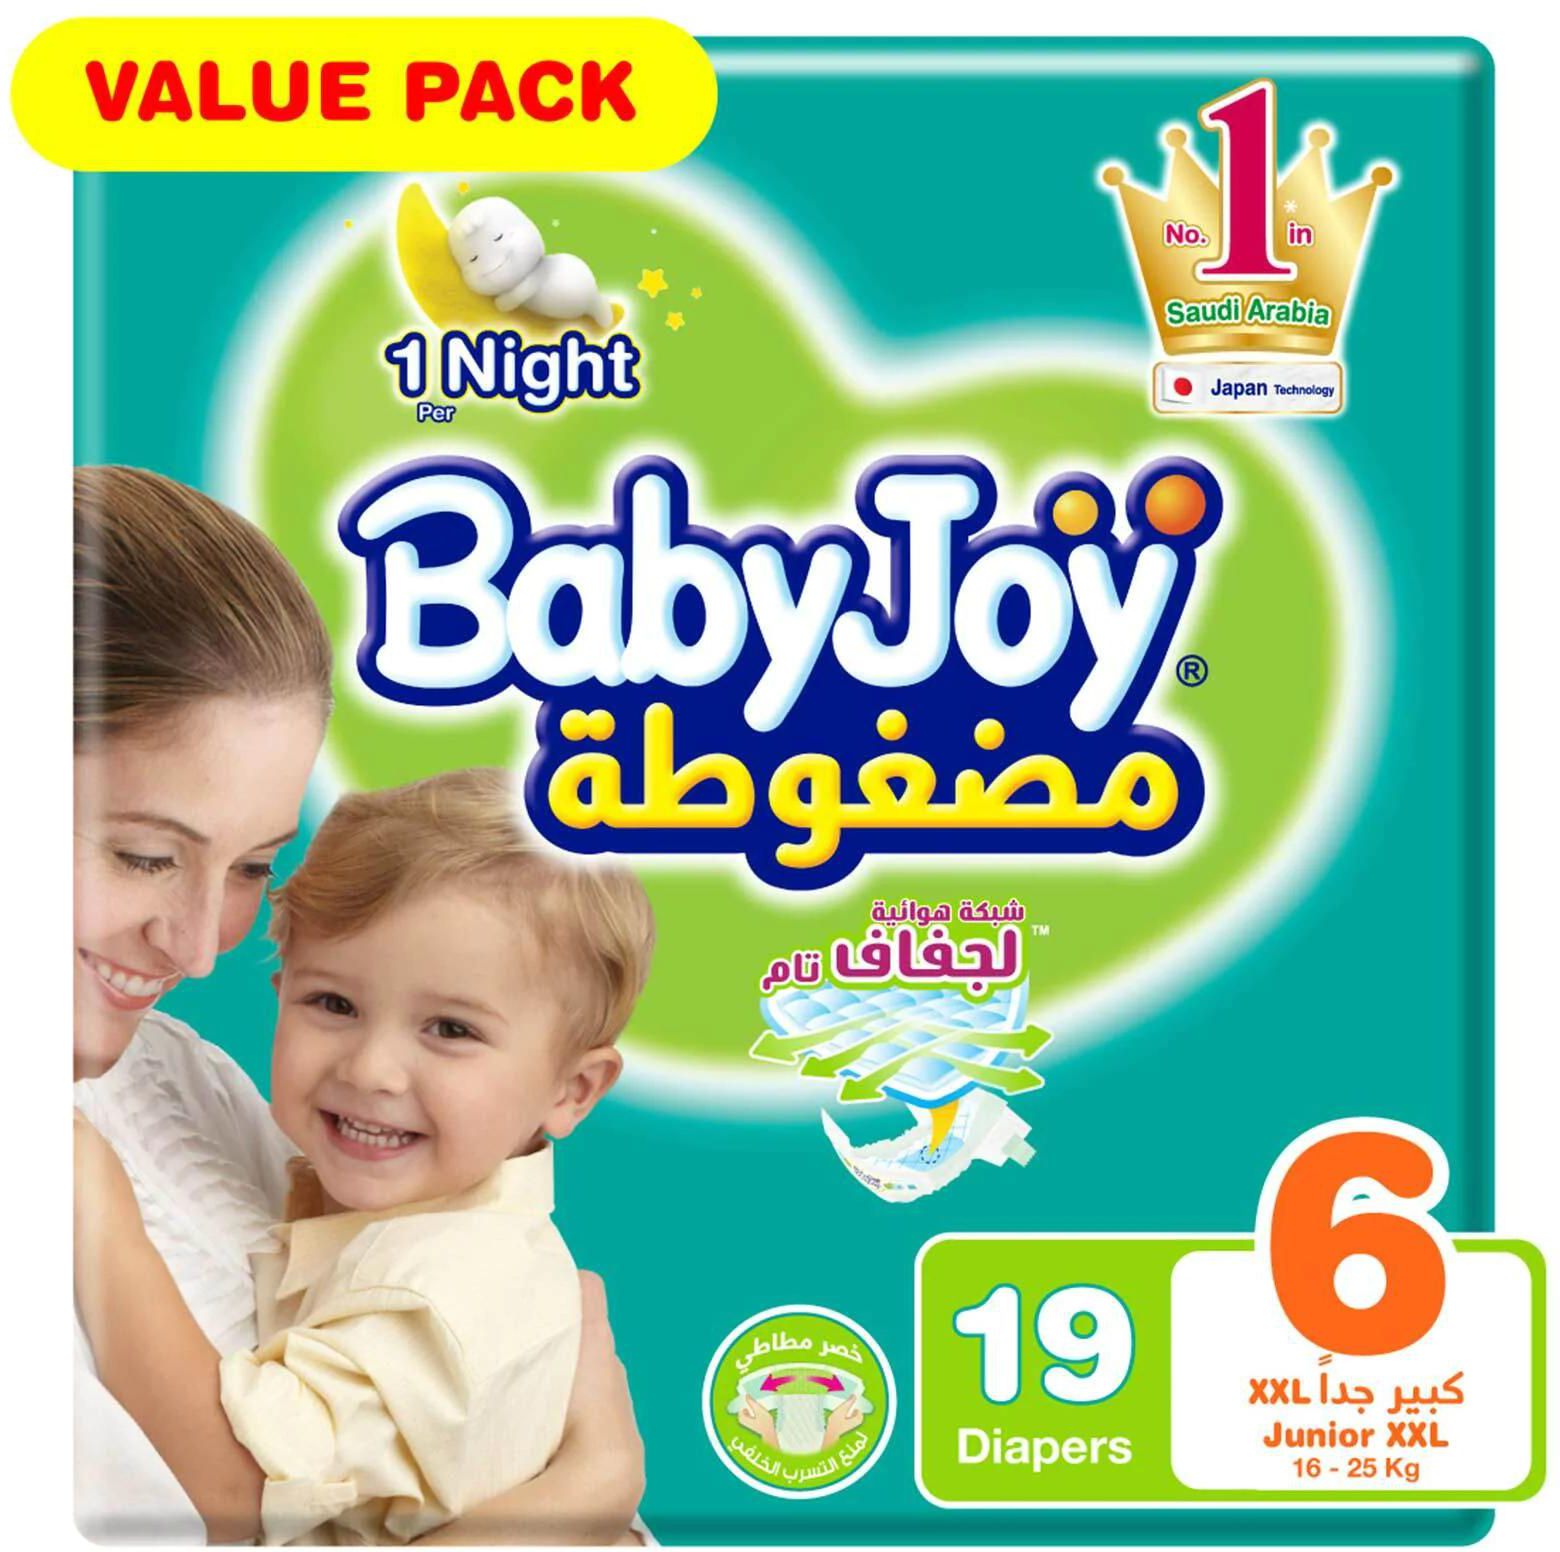 Babyjoy value pack 6 junior xxl +16 kg x 19 diapers